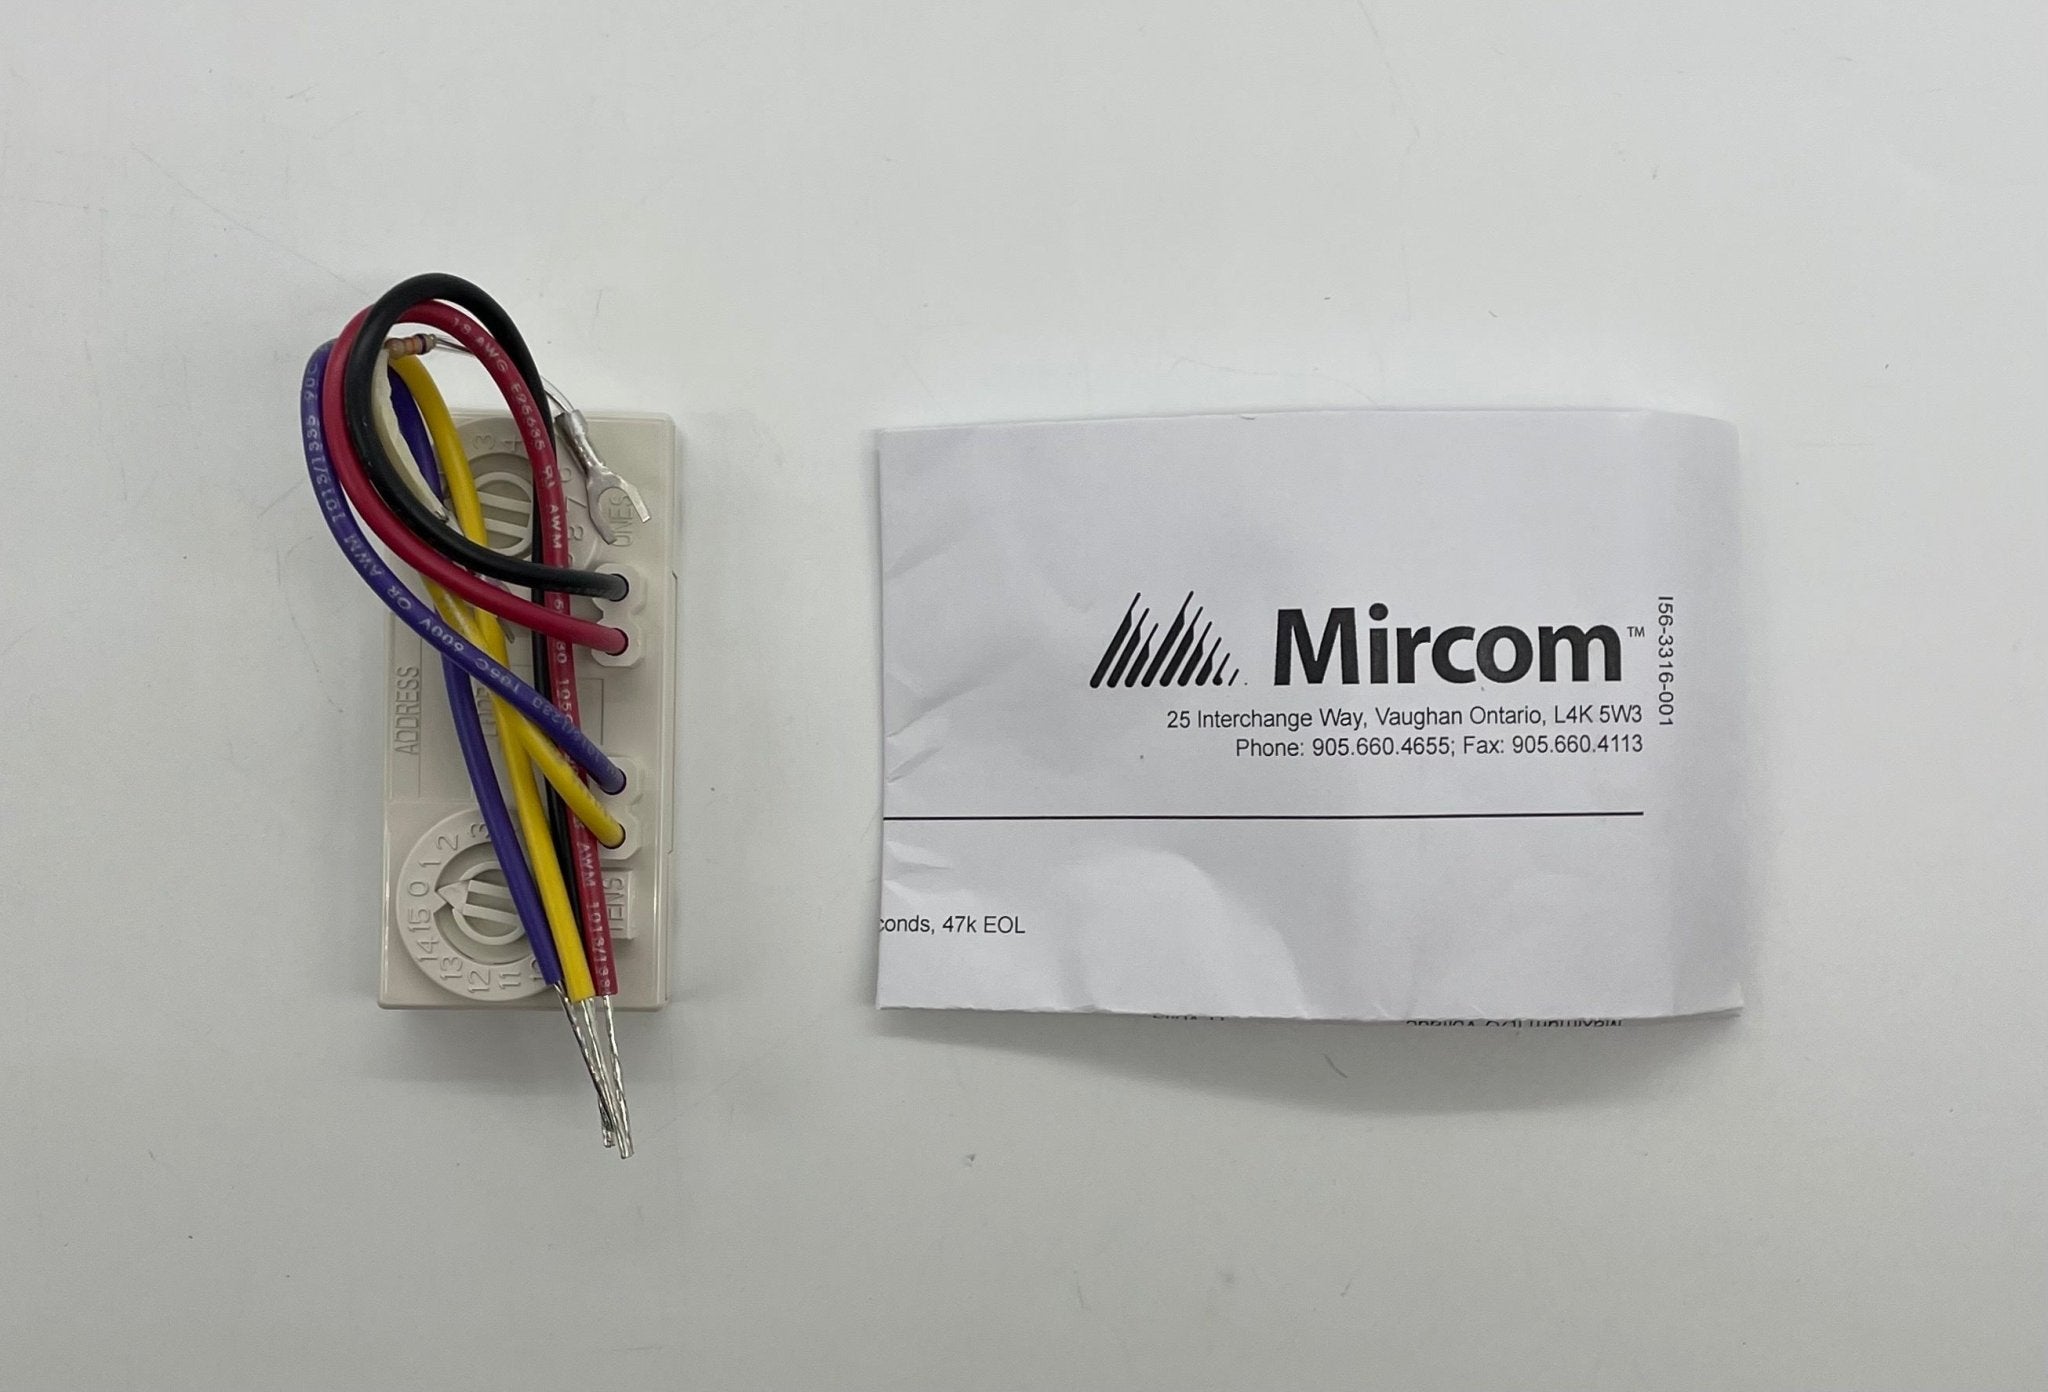 Mircom MIX-M501MAP Mini Monitor Module - The Fire Alarm Supplier